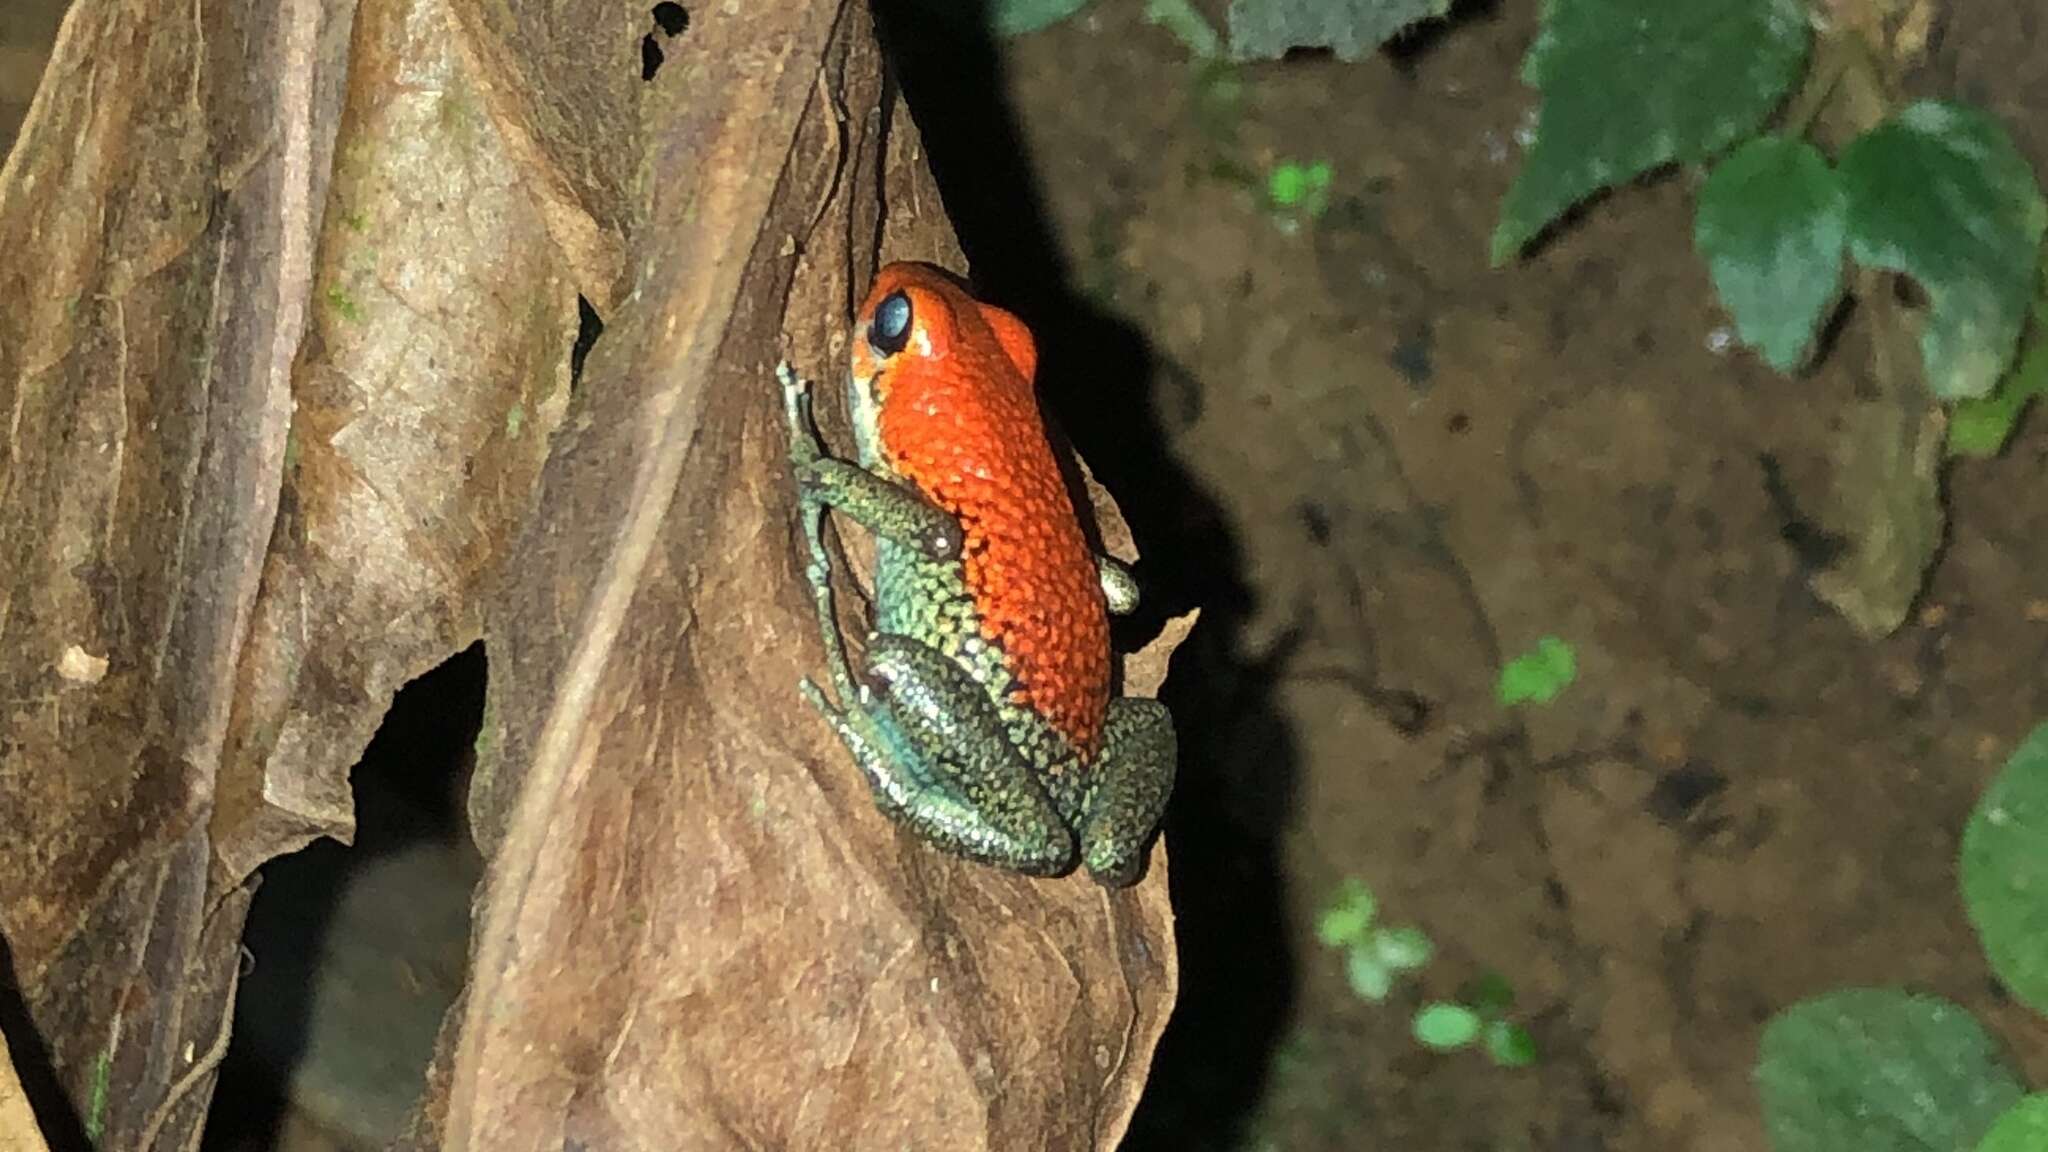 Image of Granular Poison Frog